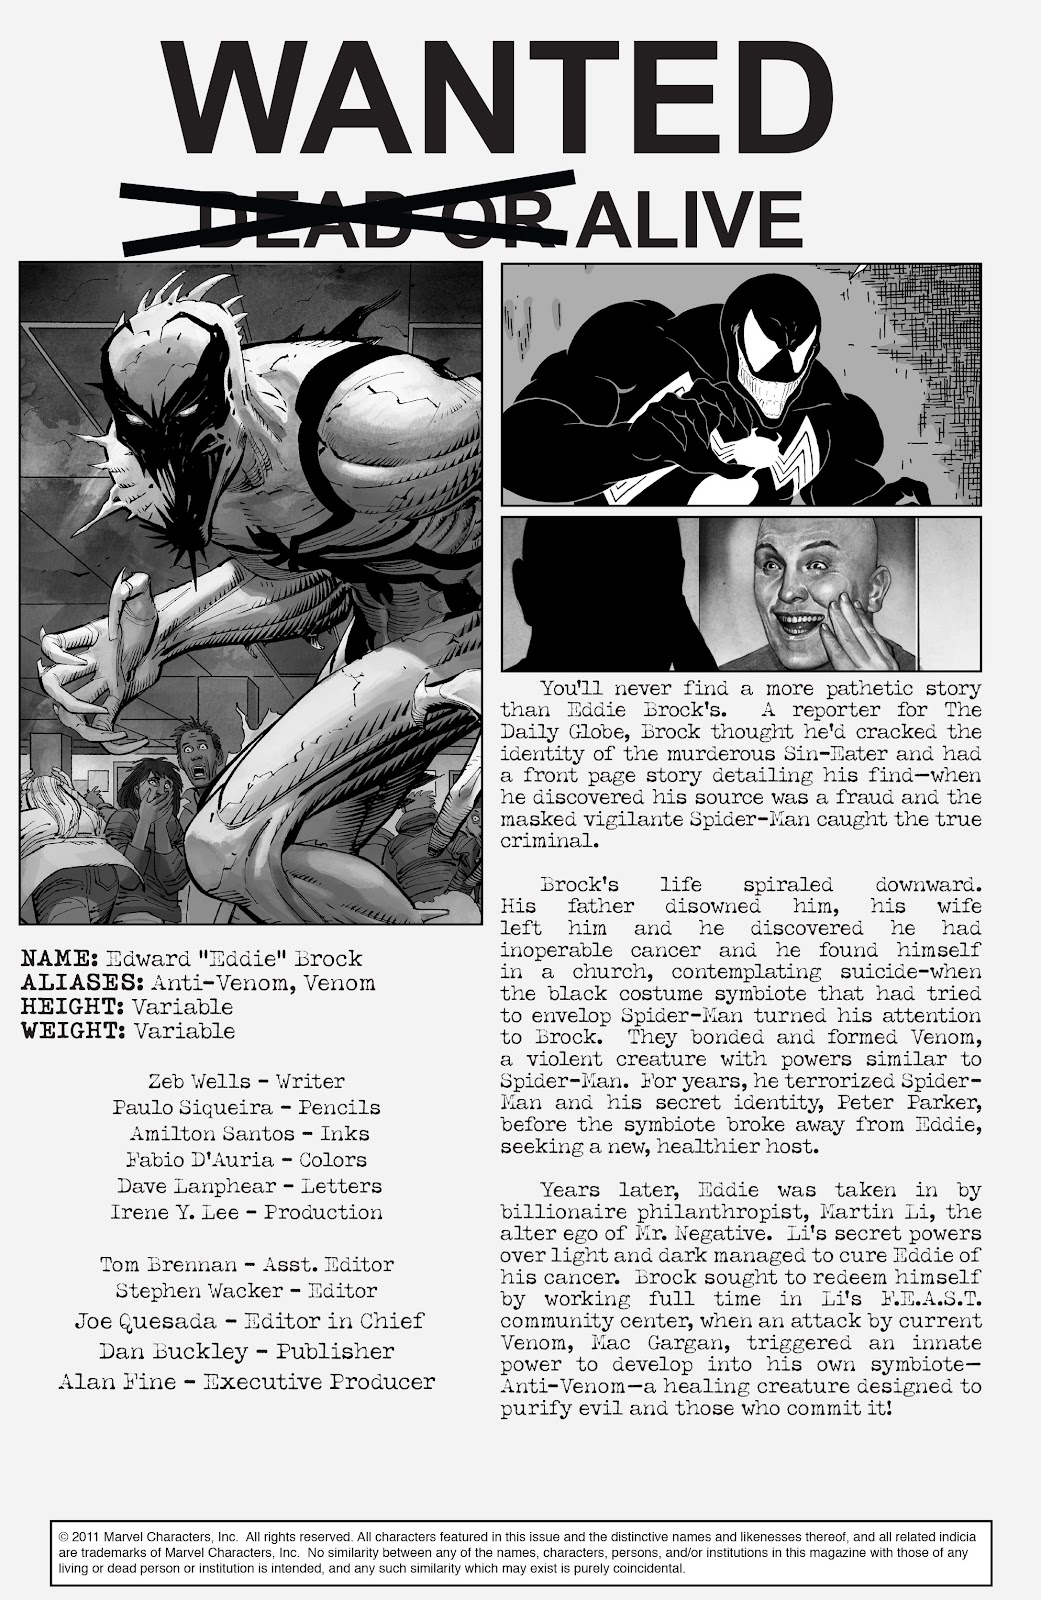 Amazing Spider-Man Presents: Anti-Venom - New Ways To Live issue 1 - Page 2